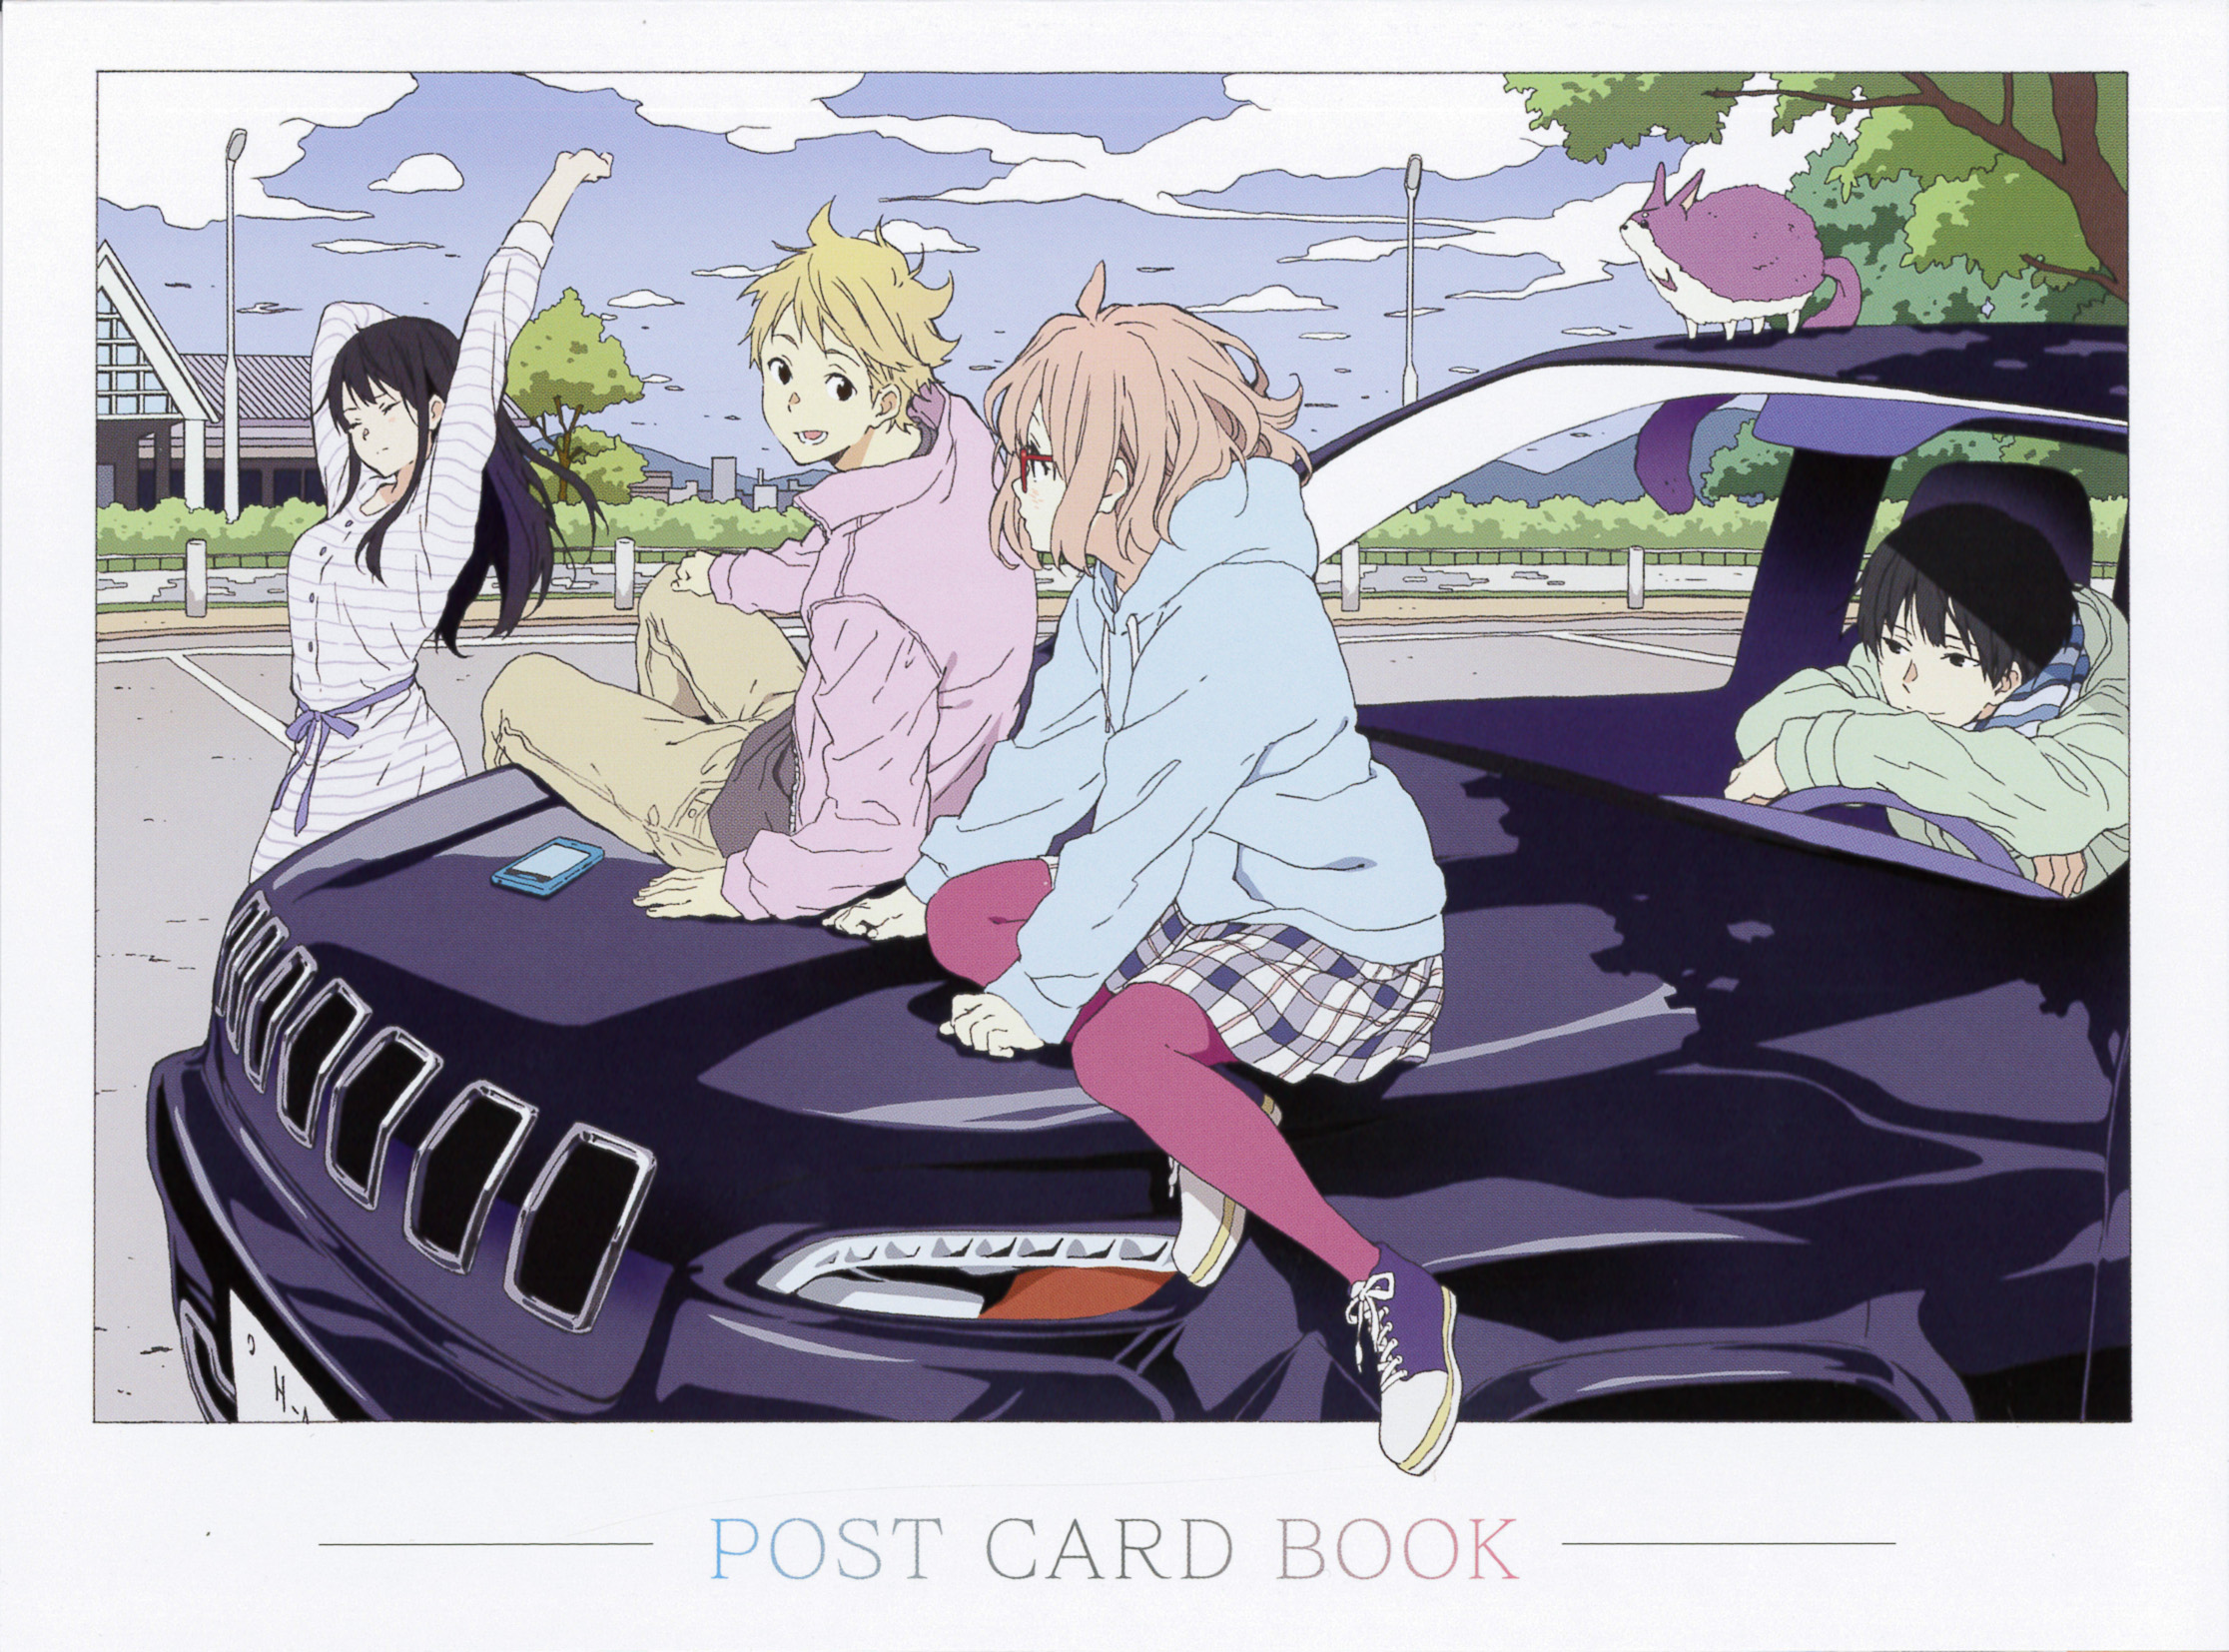  SV6407 Beyond the Boundary Mirai Kuriyama Kyoukai no Kanata  Anime Manga Art 24x18 Print POSTER: Posters & Prints